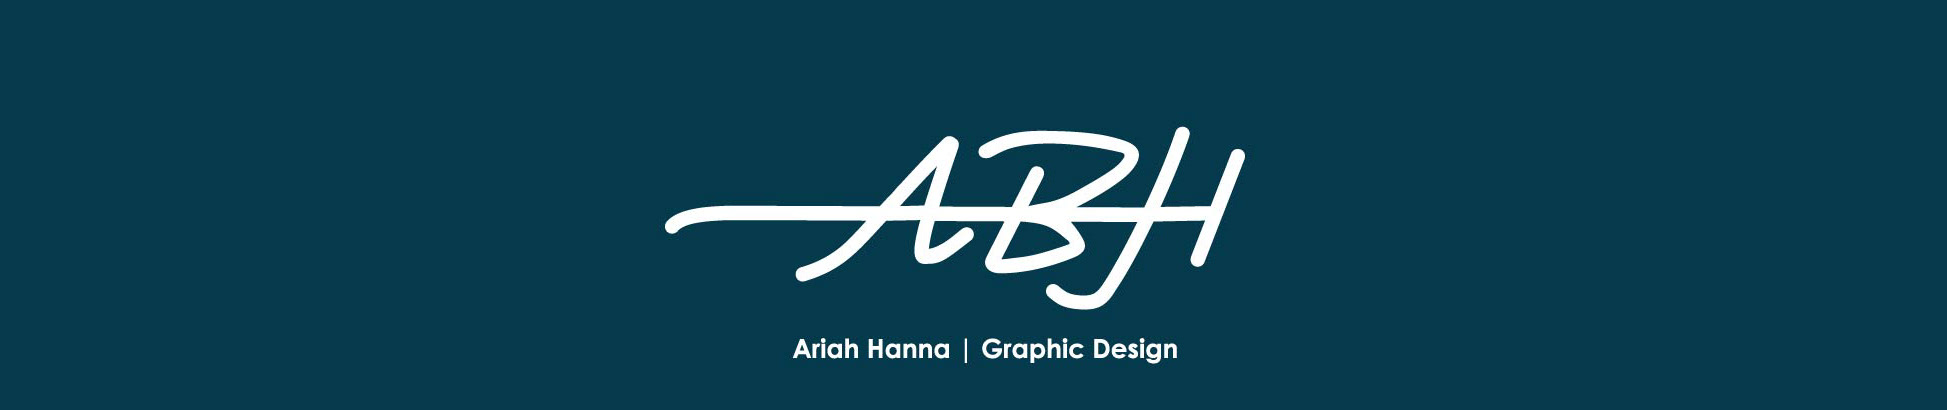 Ariah Hanna's profile banner